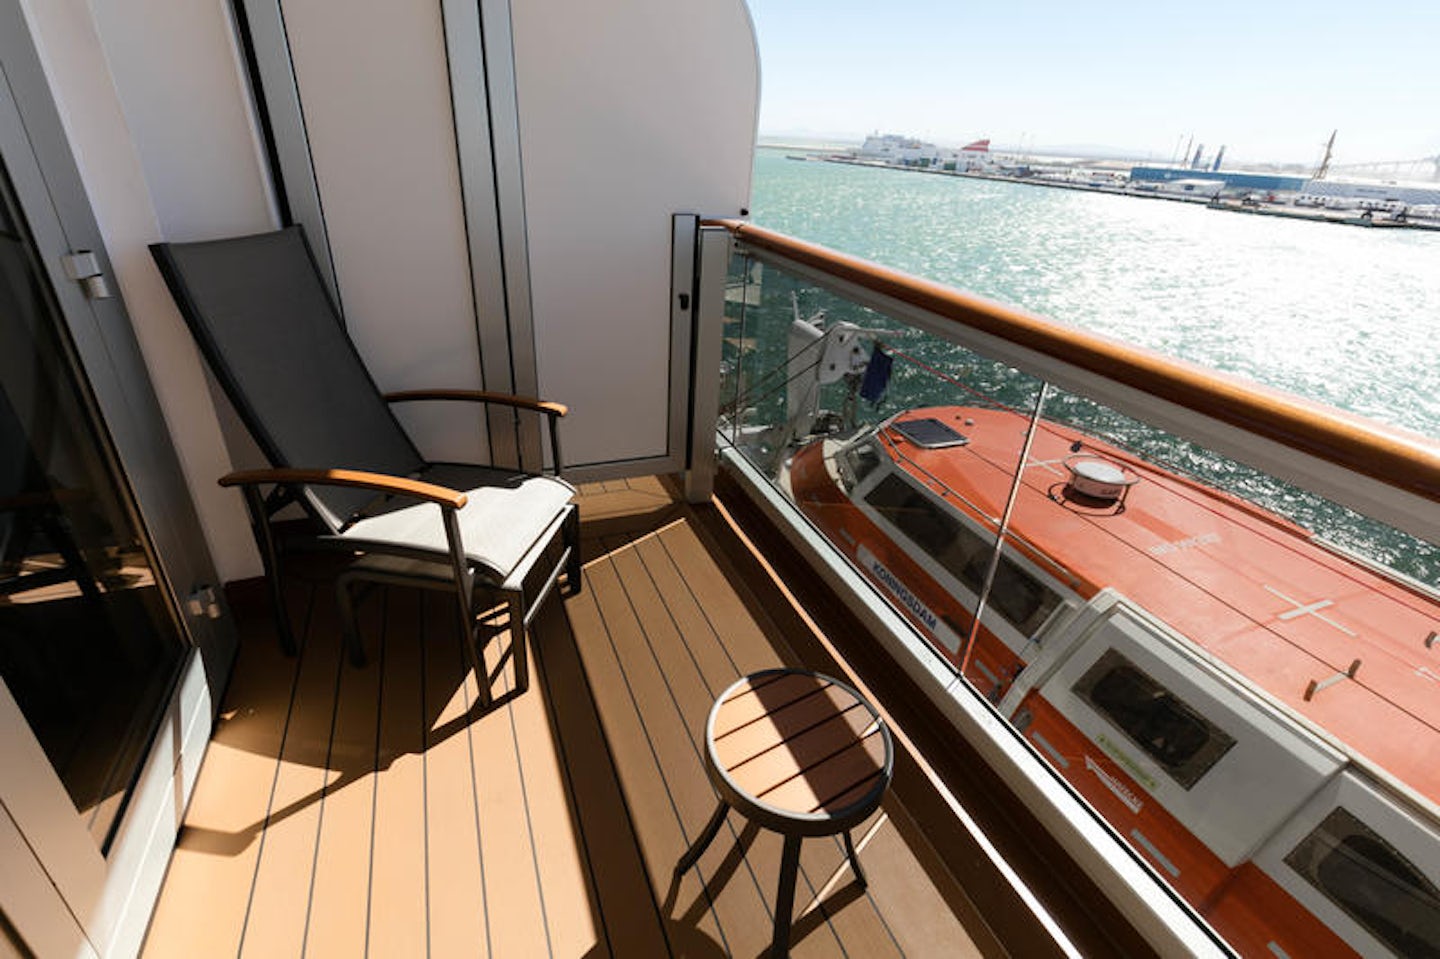 koningsdam cruise ship rooms